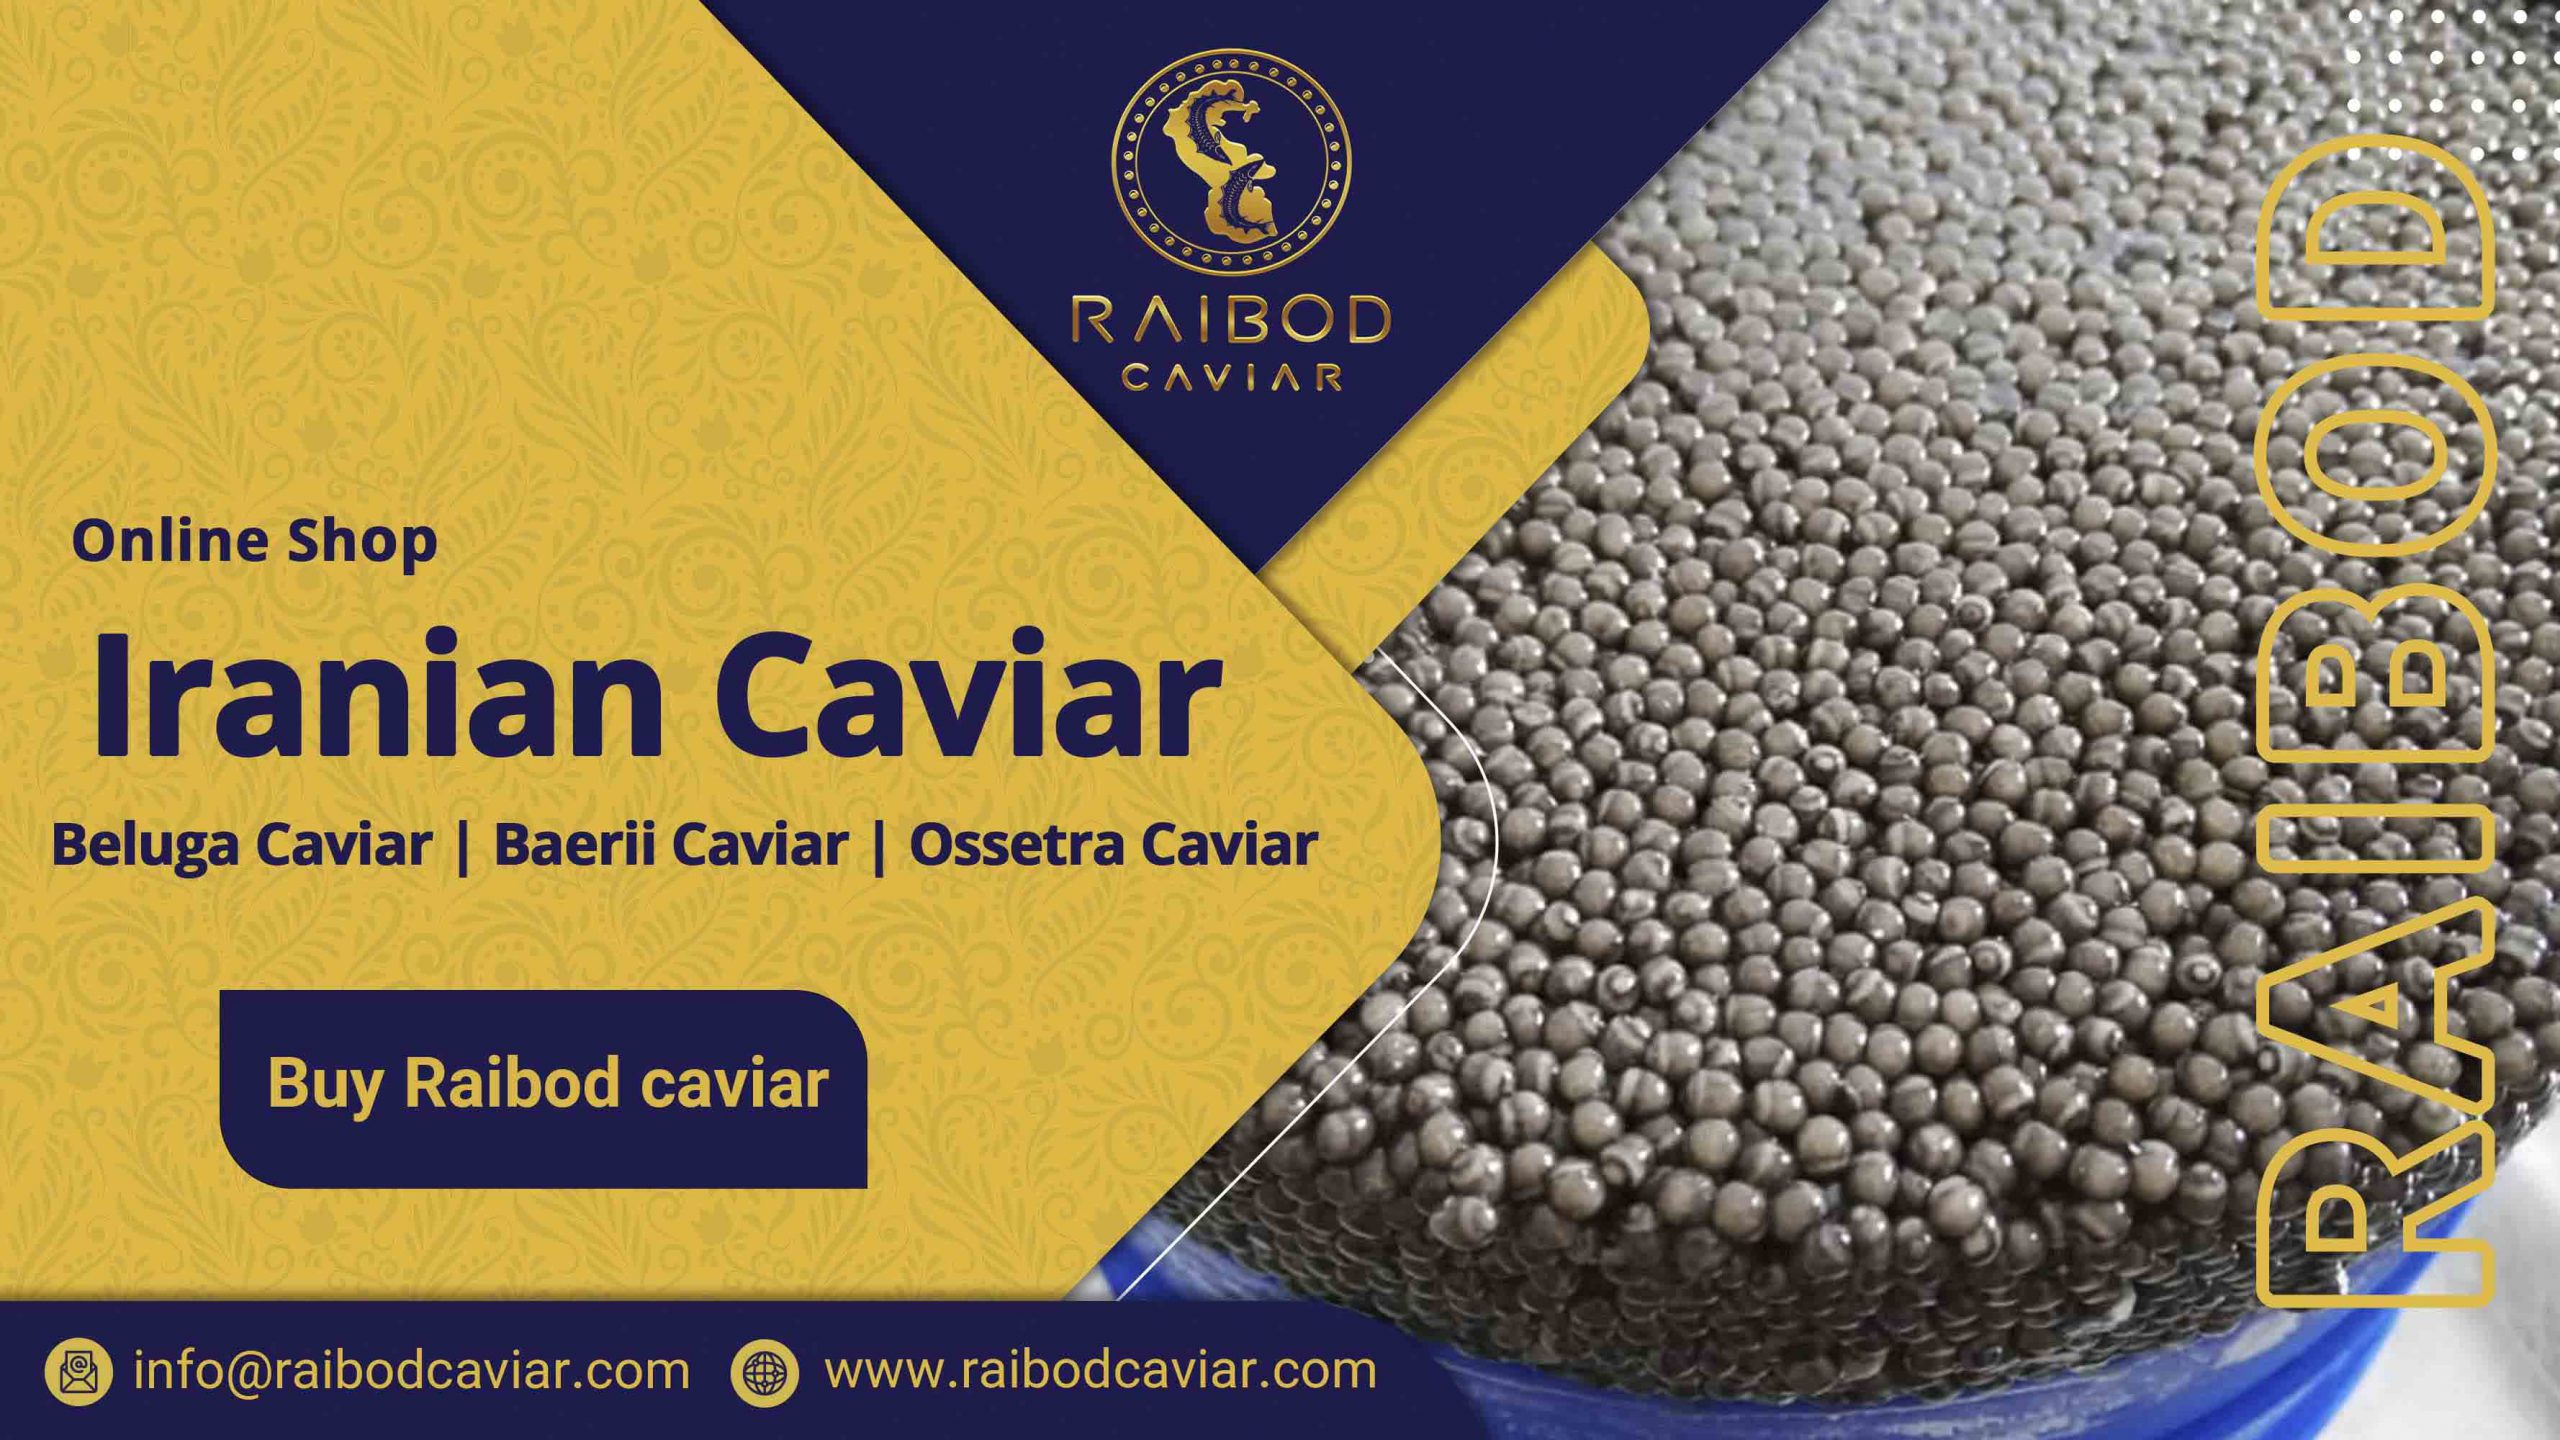 Caviar Distribution Company